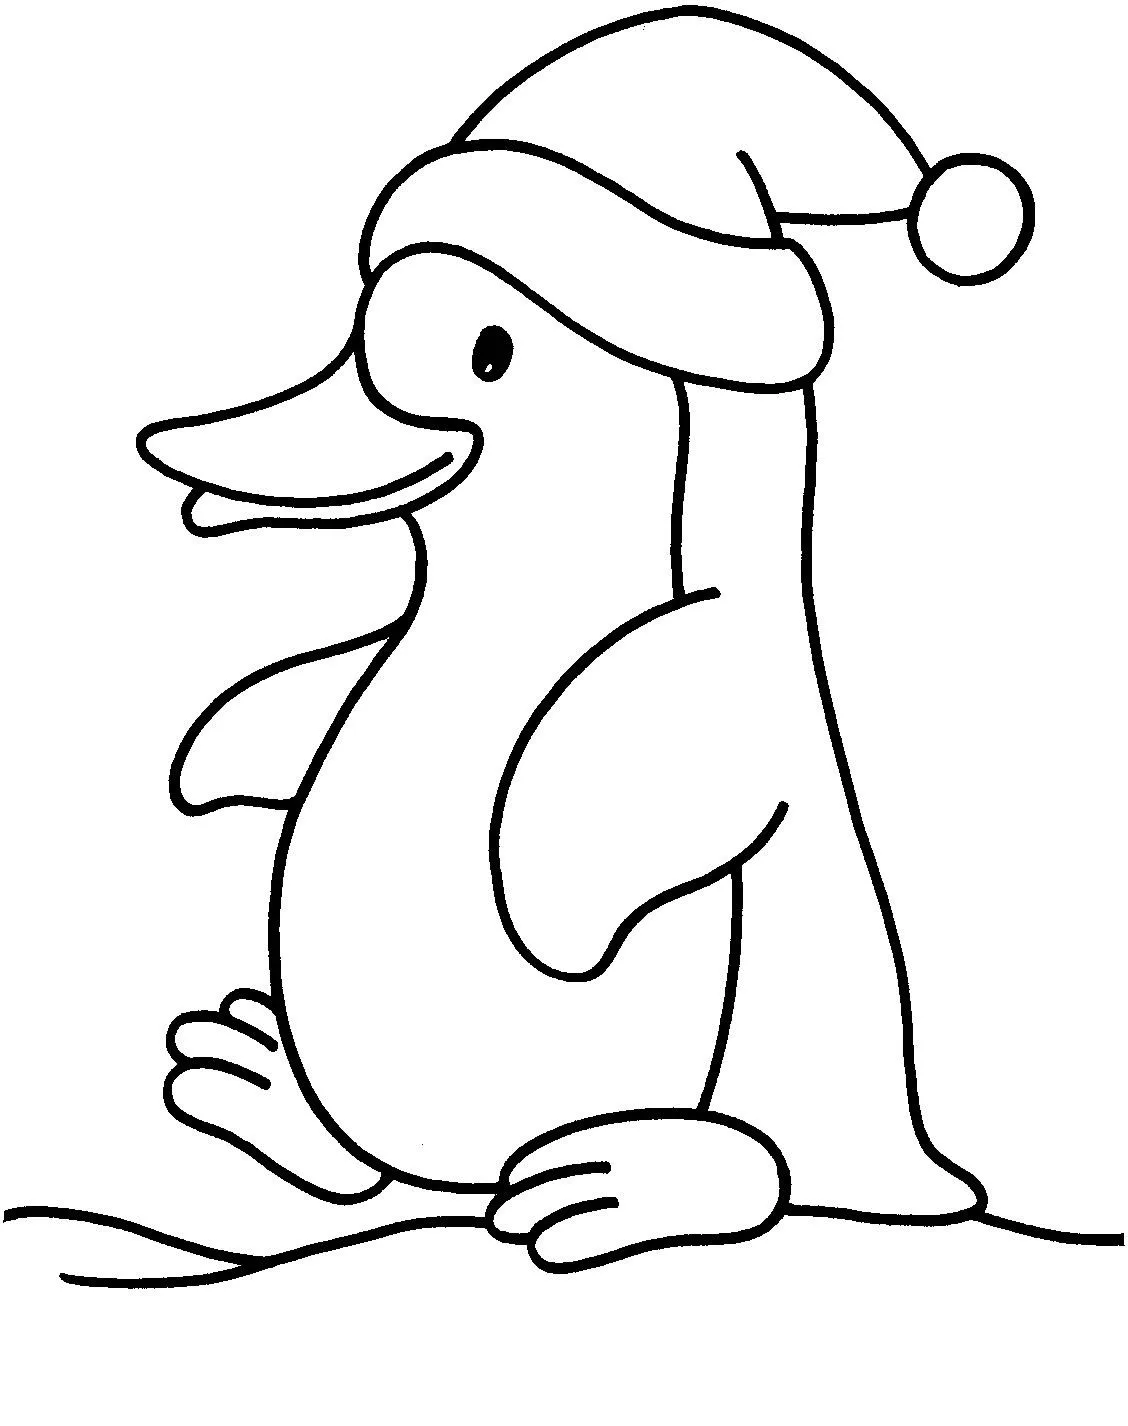 Pinguinos para colorear - Dibujos para colorear - IMAGIXS